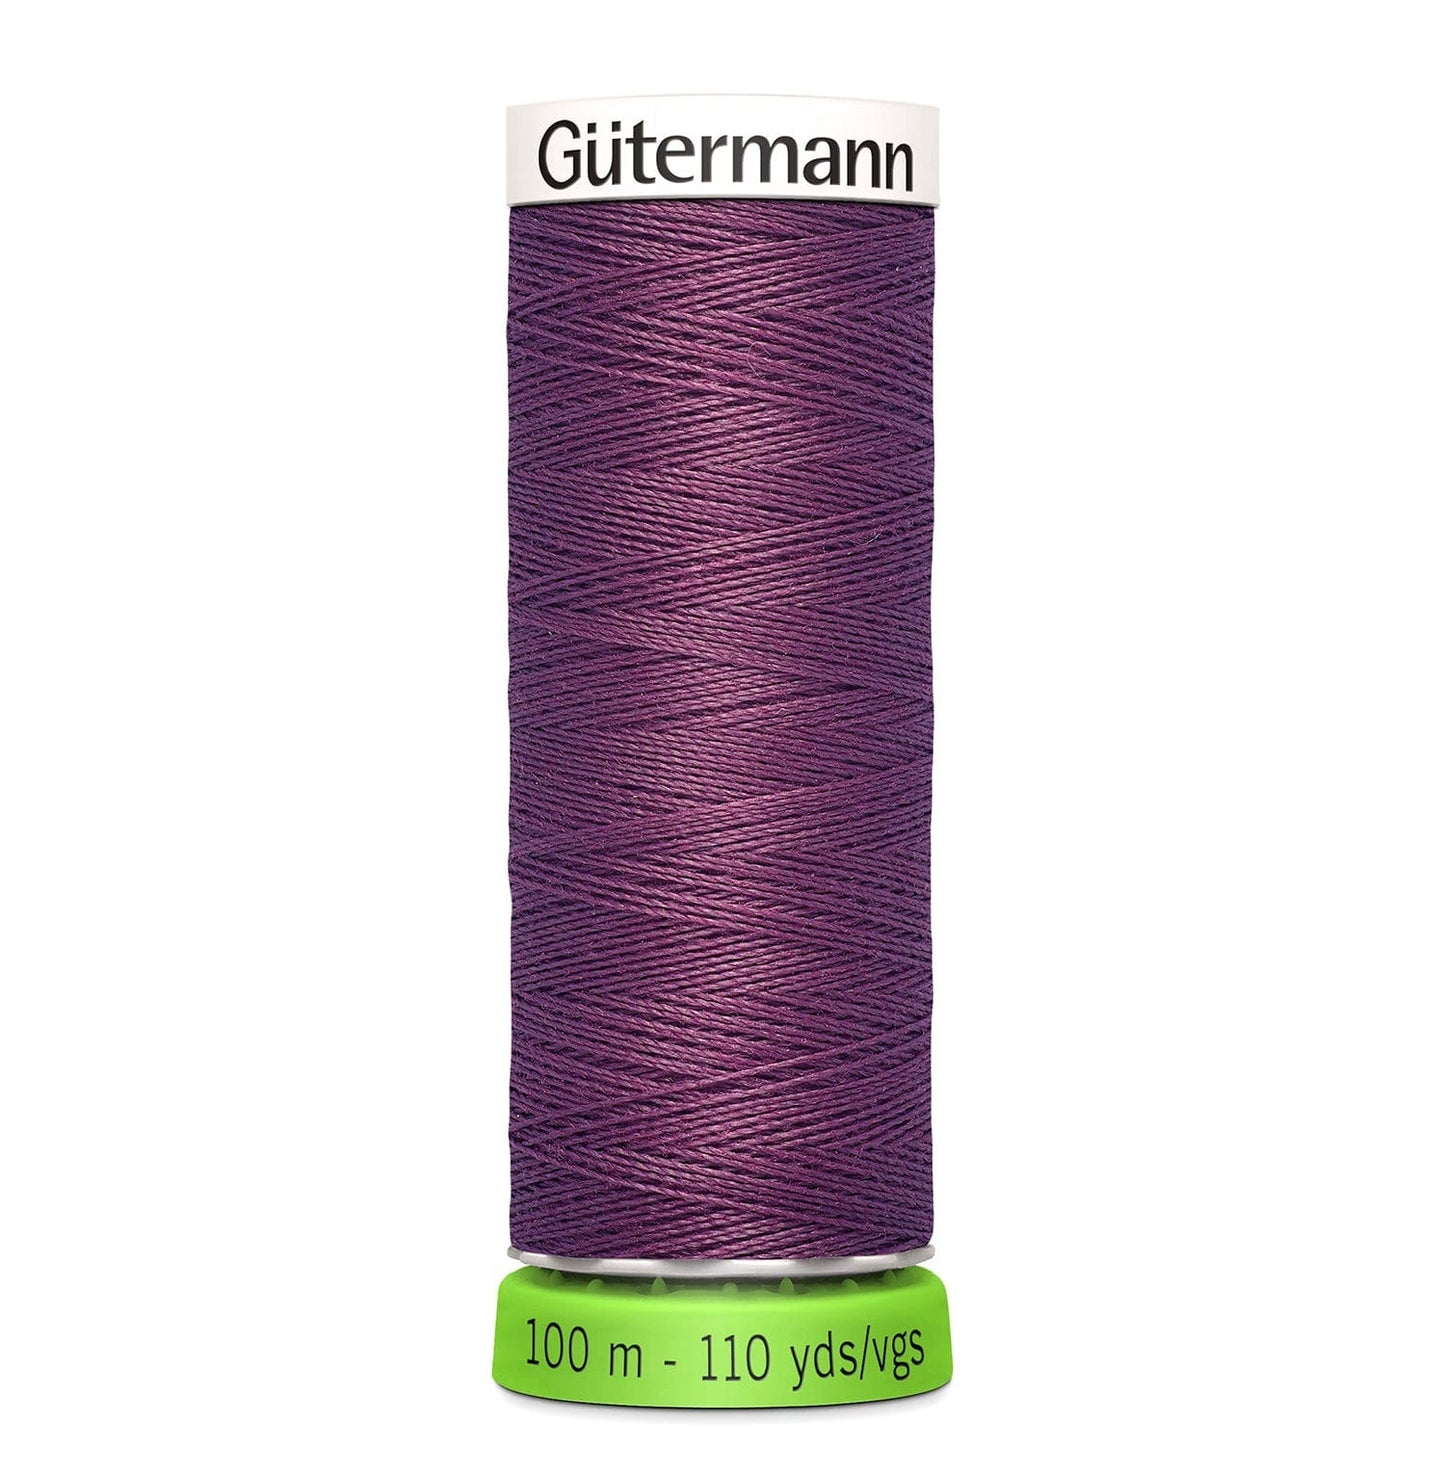 100 m Reel Gütermann Recycled Sew-All Thread in Grape Purple no. 259